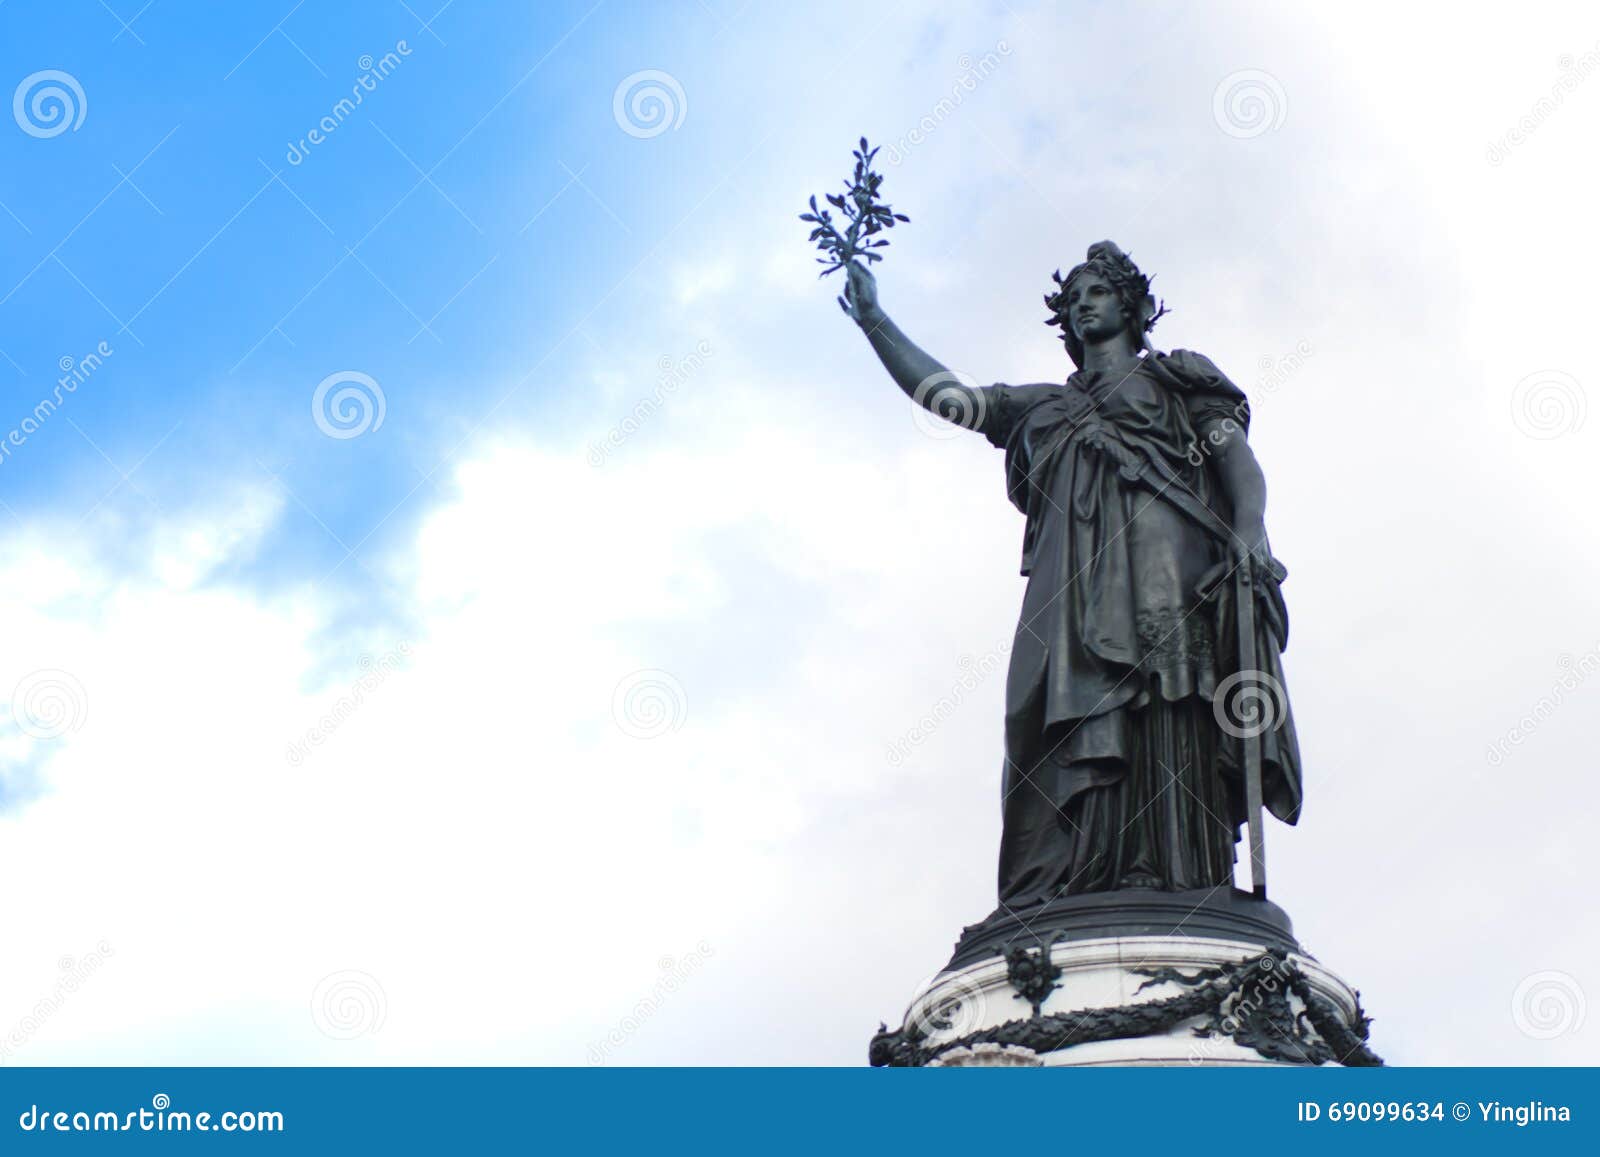 french statue of liberty in place de la republique